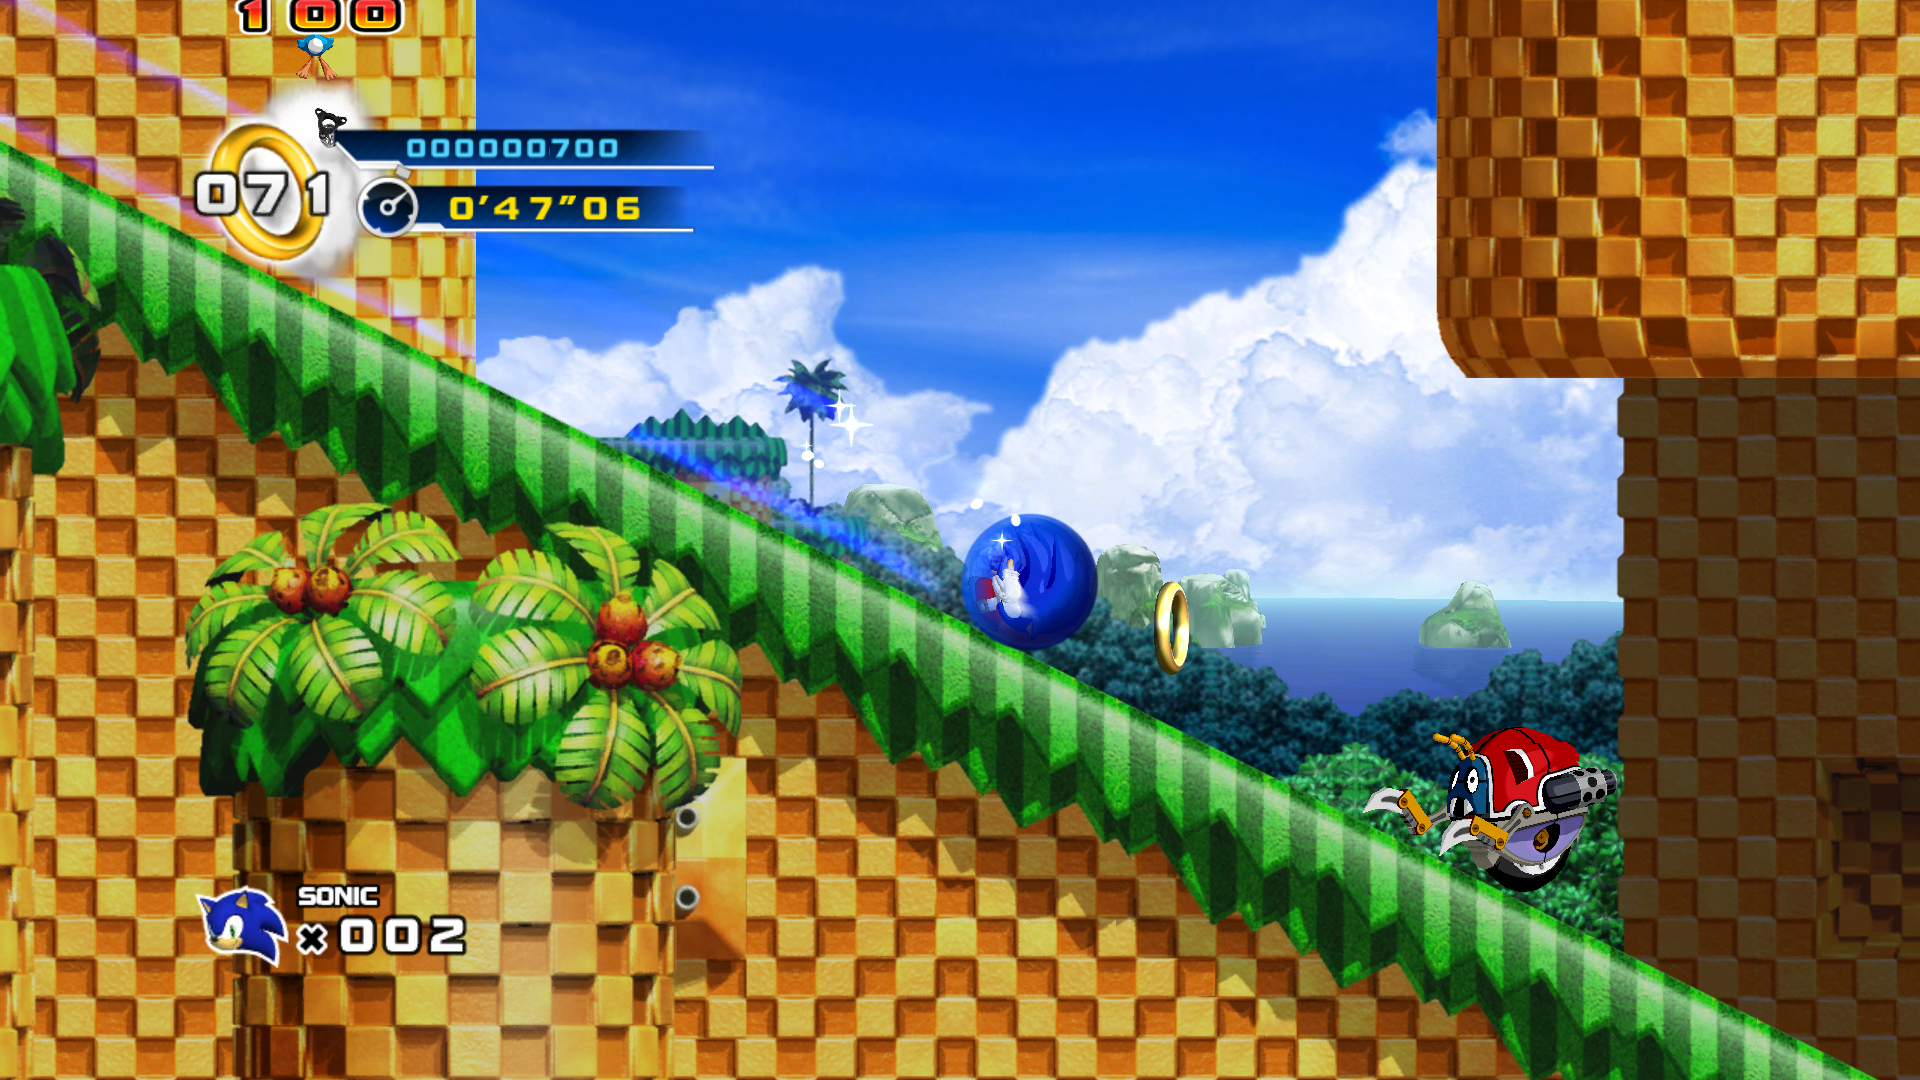 Sonic-the-hedgehog-4-screenshots-oxcgn-1